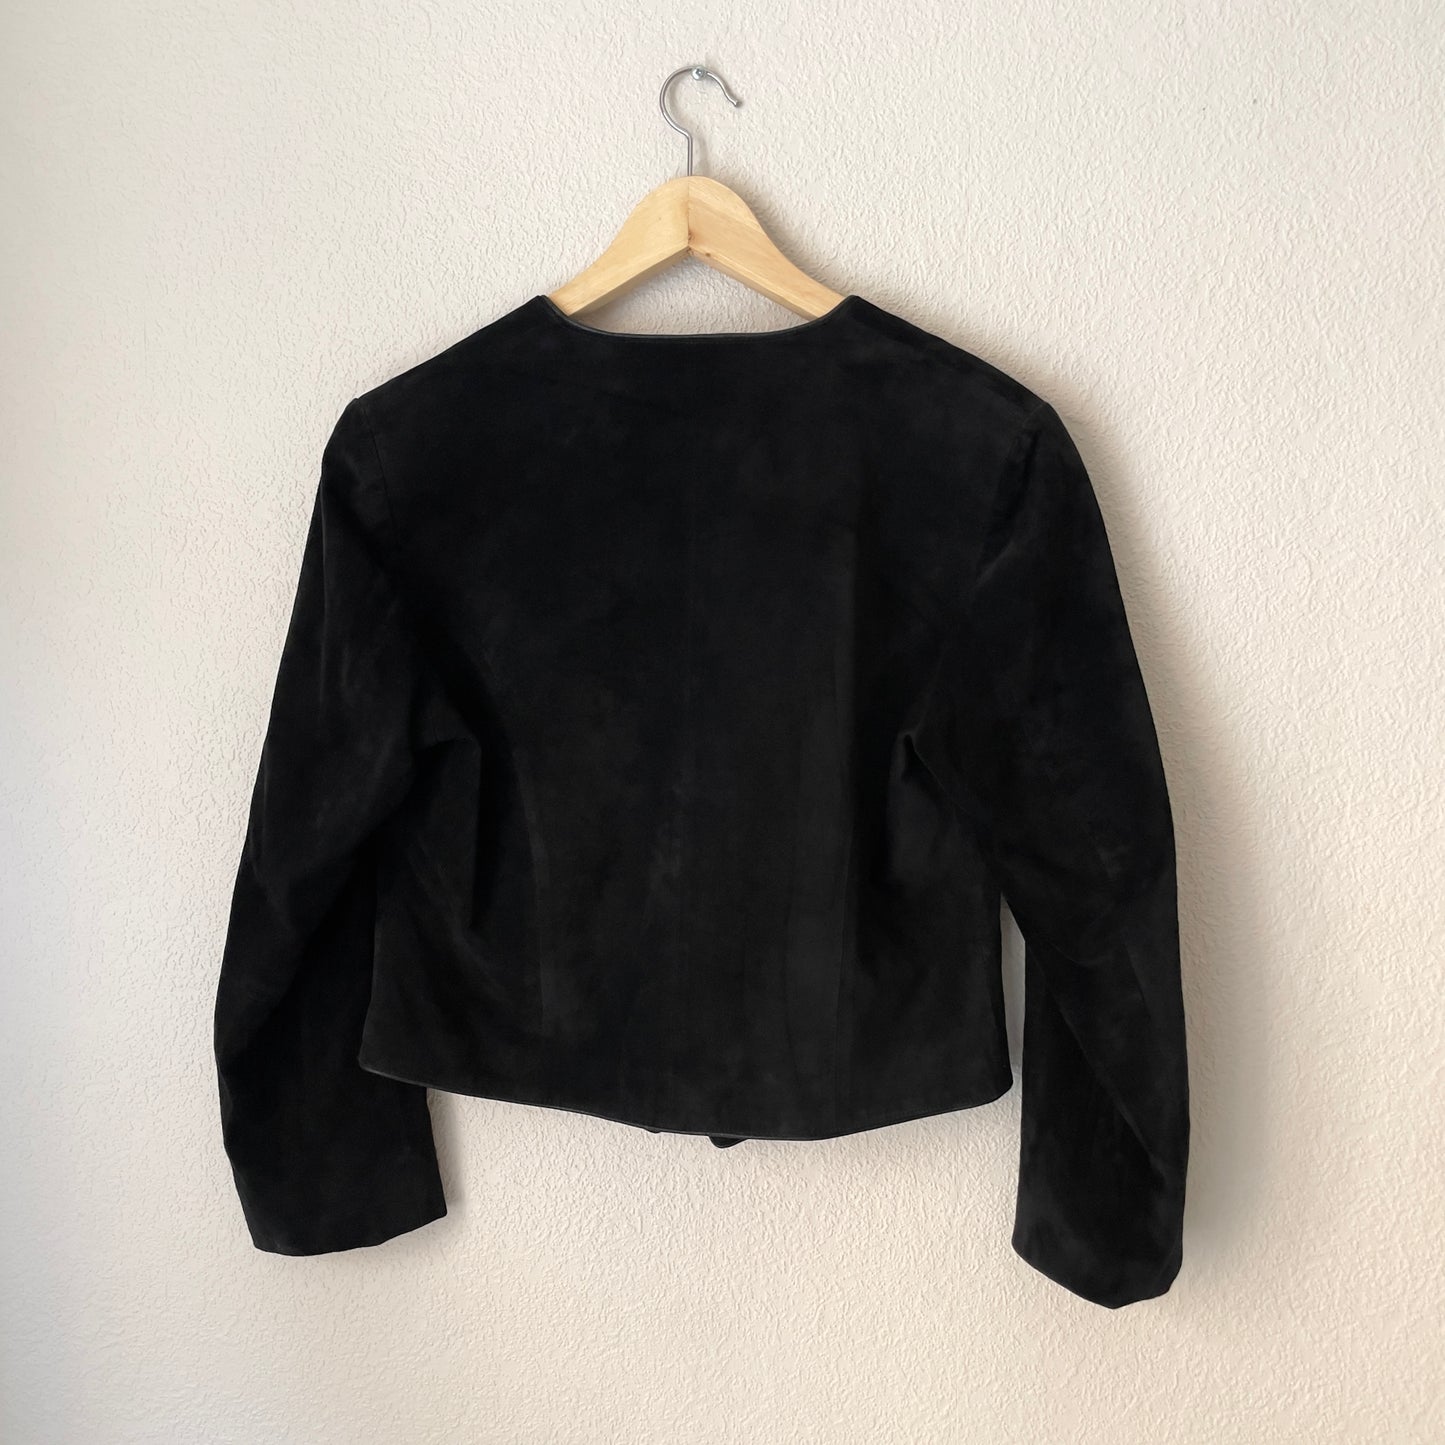 Vintage Black Suede Jacket